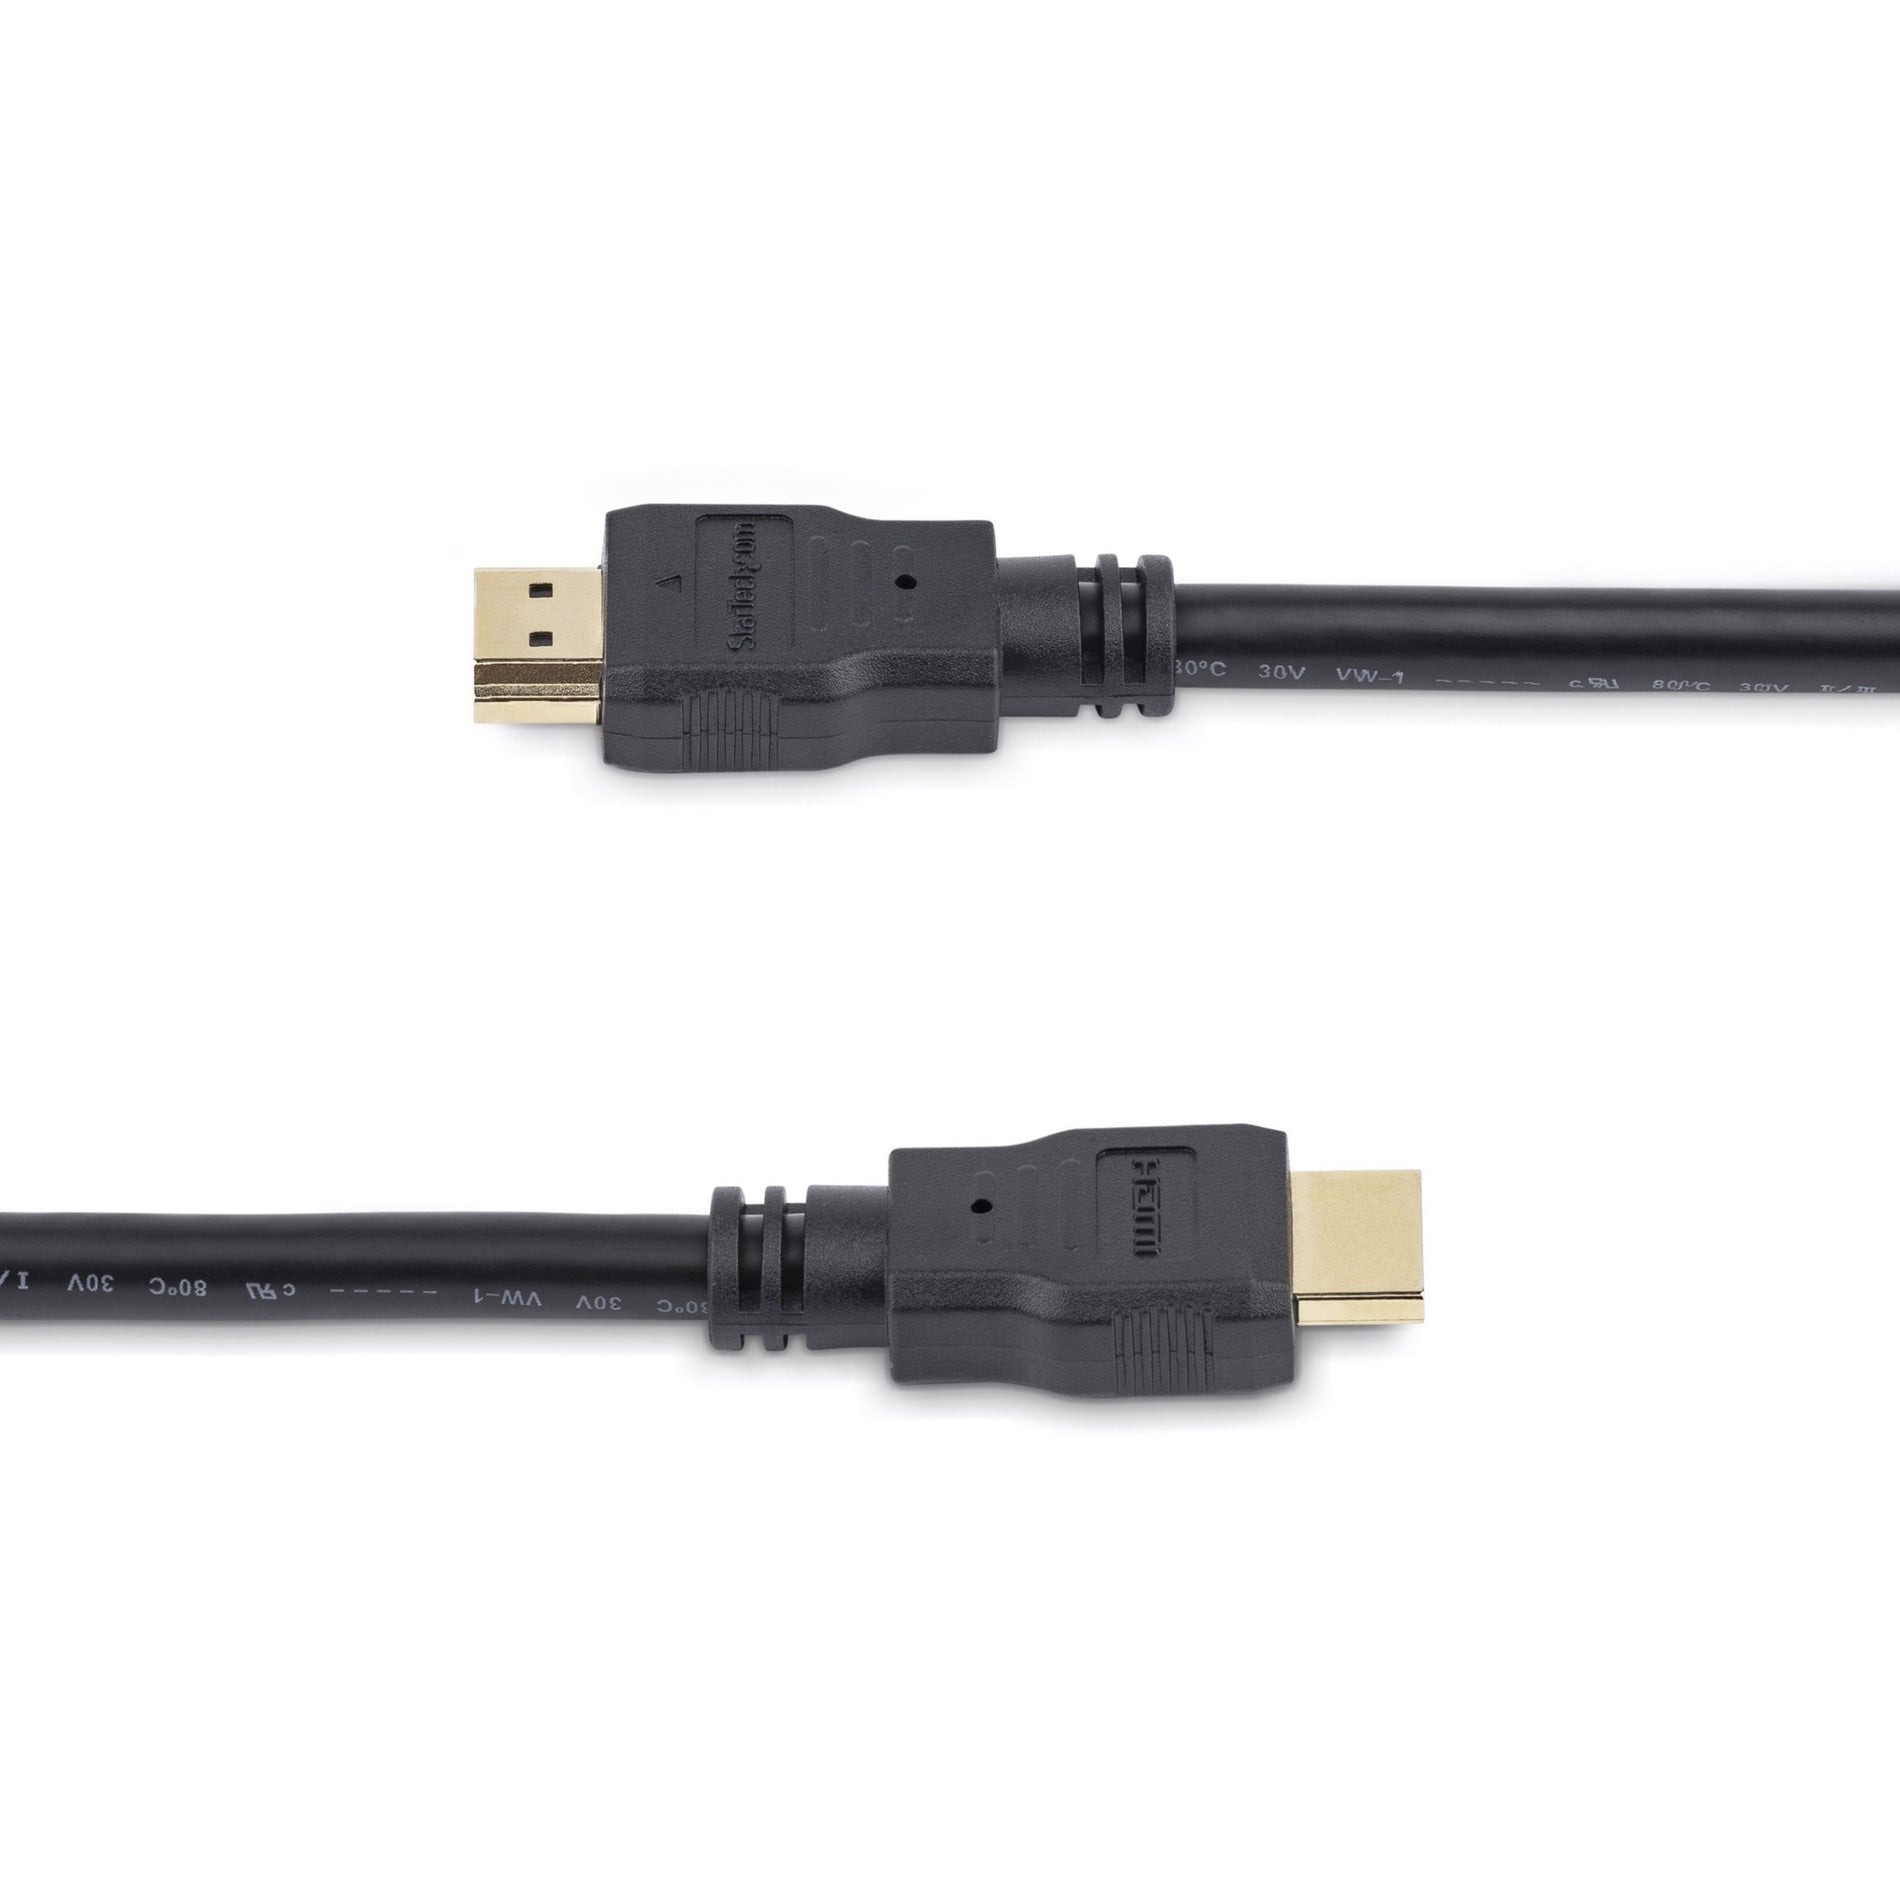 StarTech.com - 高清晰度 HDMI 电缆 HDMM1M - 超高清 4k x 2k HDMI 电缆，模压，耐蚀，防护套，铜导体，屏蔽，3.28英尺，镀金连接器，28 AWG，支持 3840 x 2160 分辨率，黑色